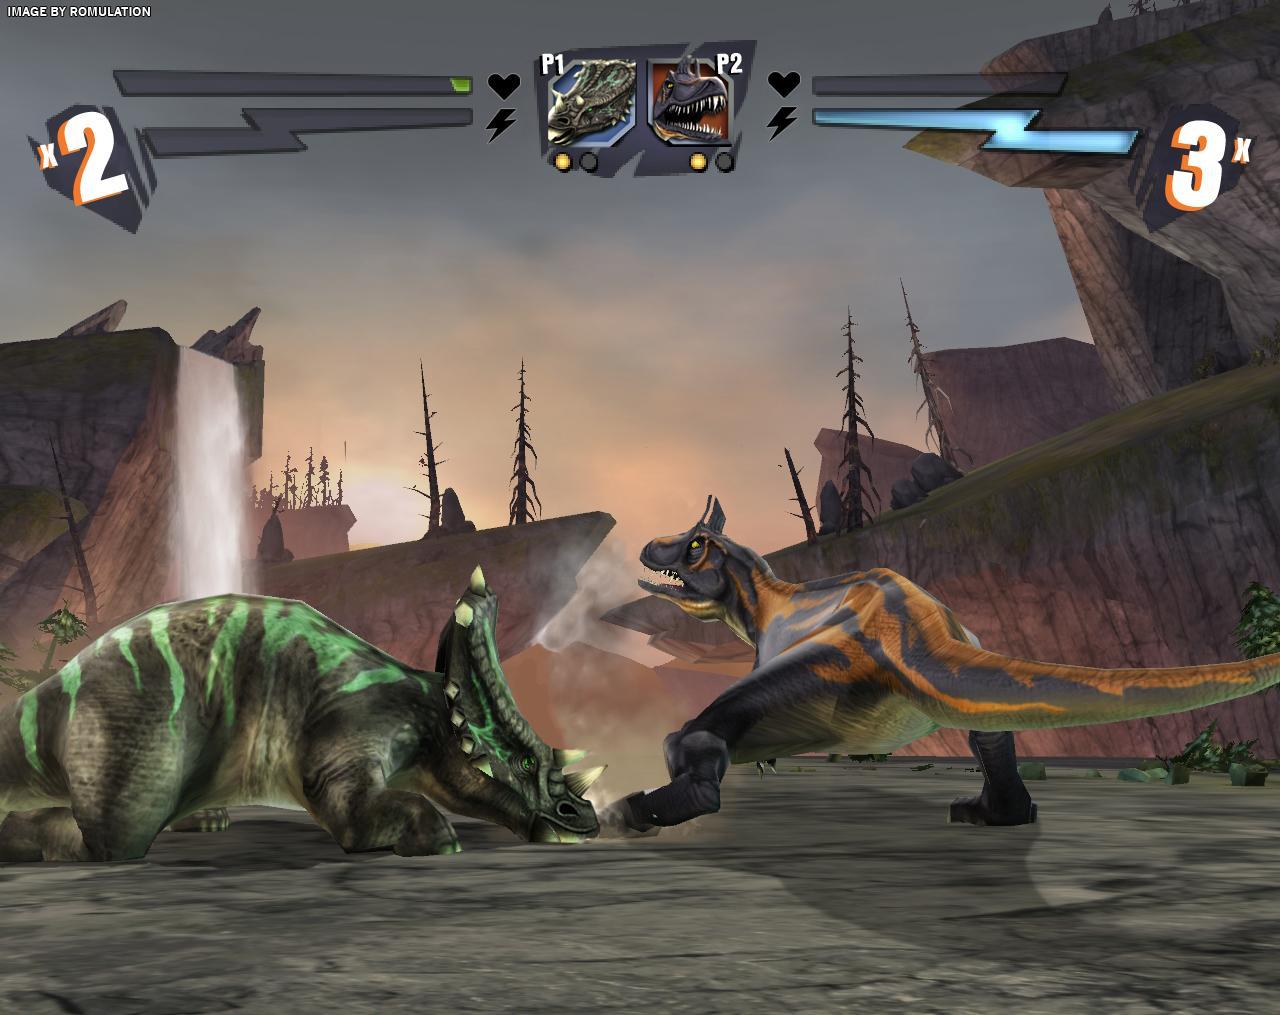 Dinosaur battle. Battle Dinosaur игра. Combat of giants: Dinosaurs 3d (Nintendo 3ds). Dino Strike Wii. Битва динозавров.